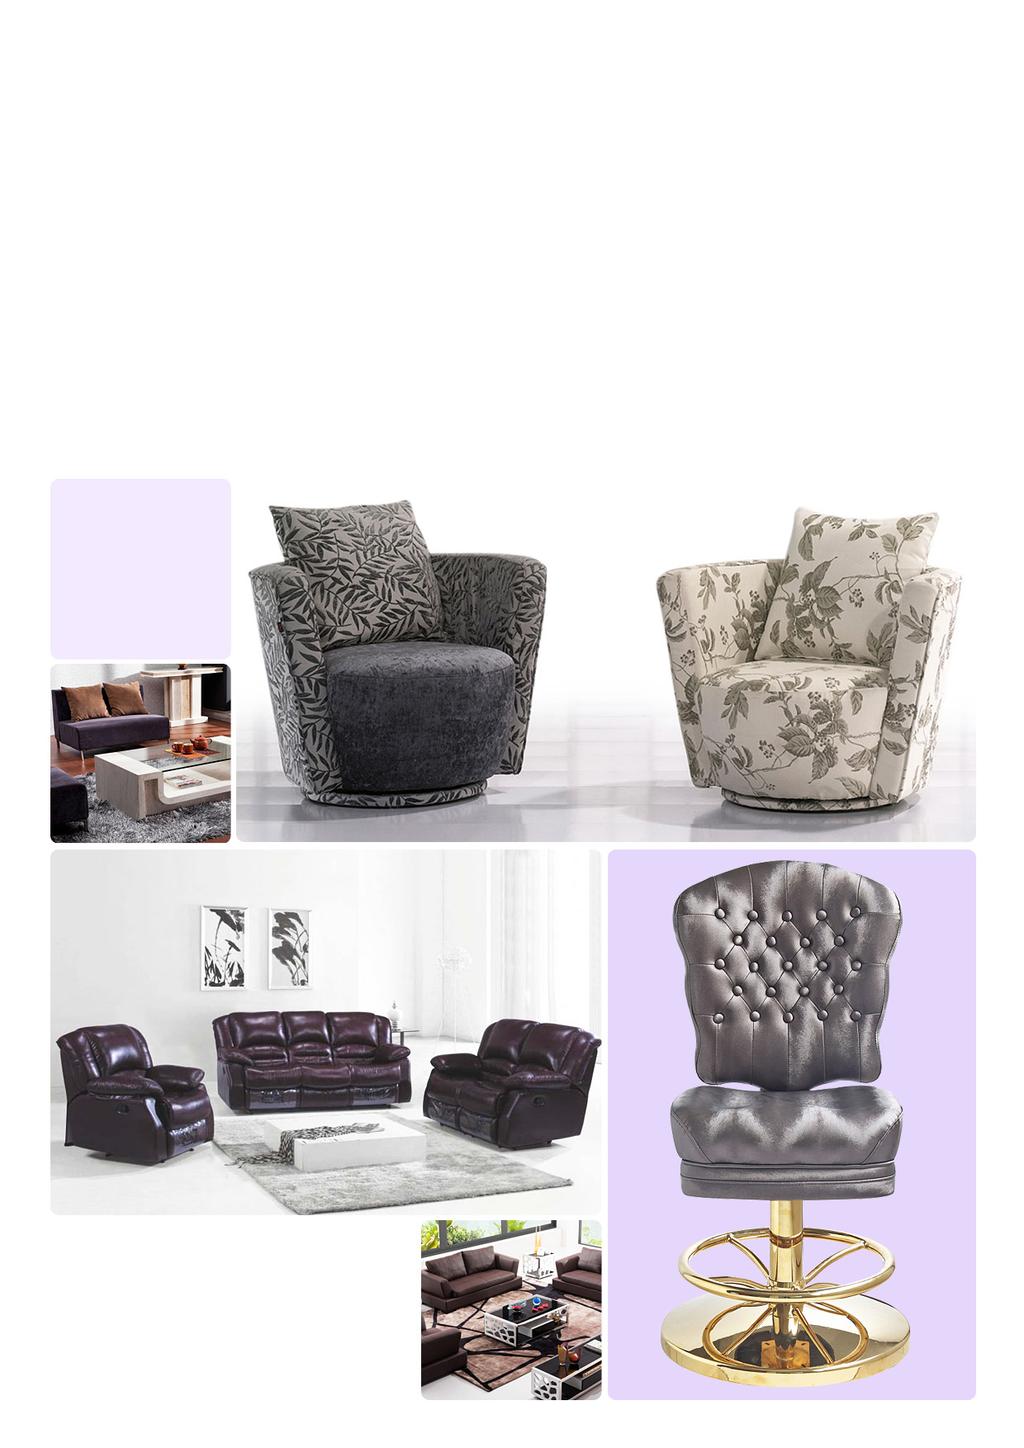 2010-2013 the United Kingdom Furniture 2013.